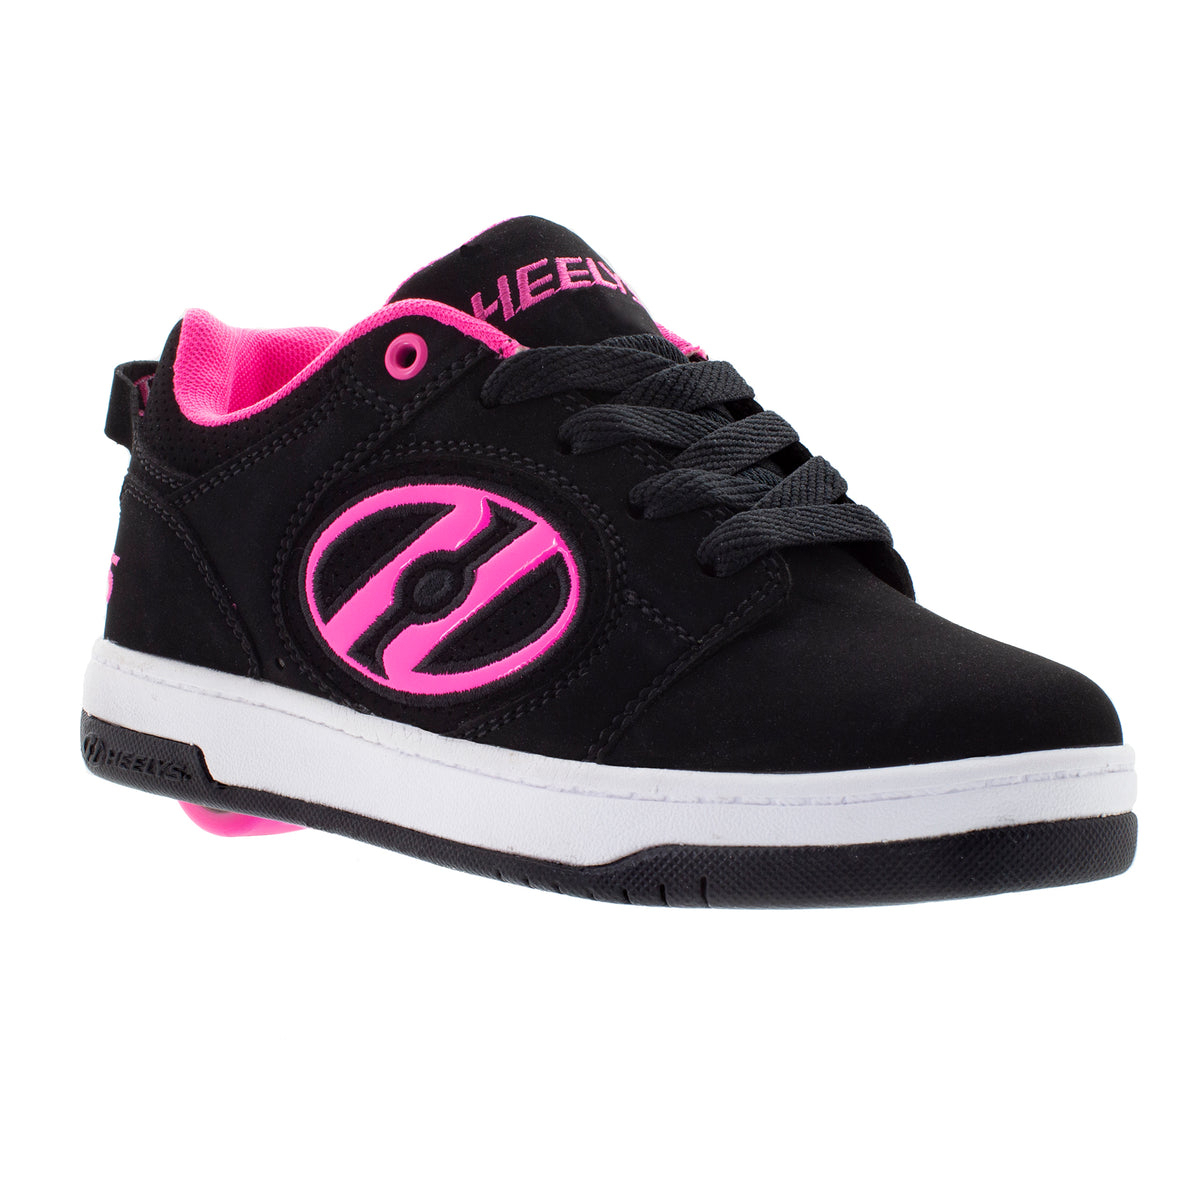 HEELYS Unisex Kids' Voyager Wheeled Shoe Black/Pink - HE100714H BLACK/PINK - BLACK/PINK, 7